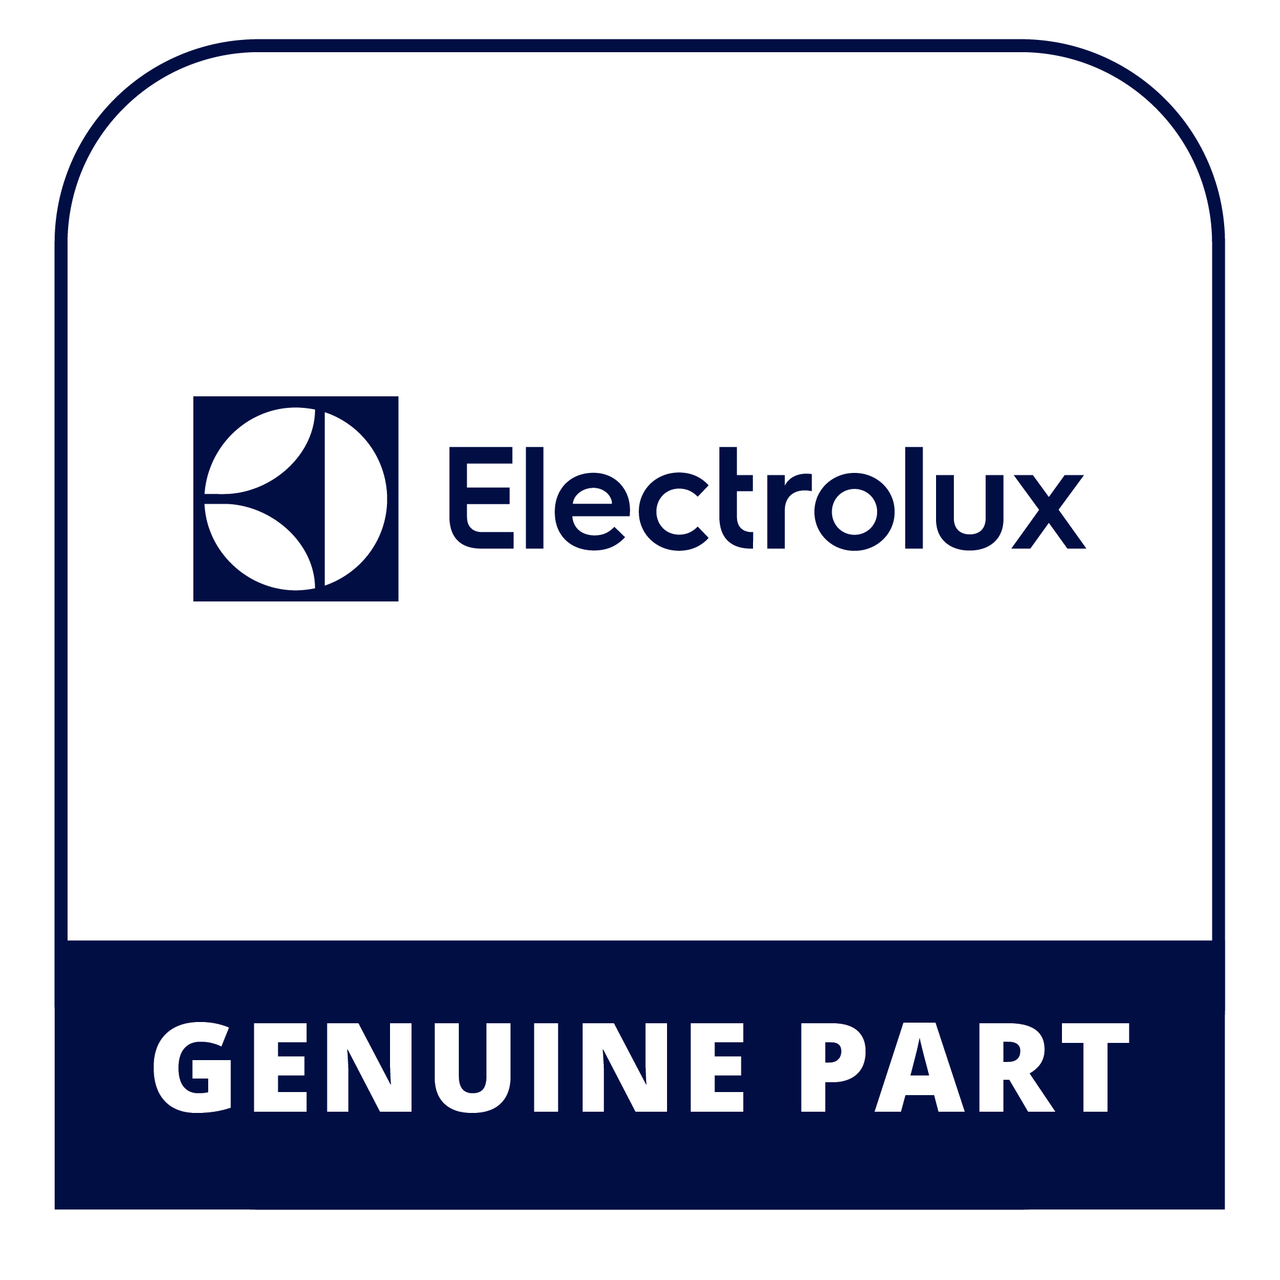 Frigidaire - Electrolux 5304500996 Trim - Genuine Electrolux Part